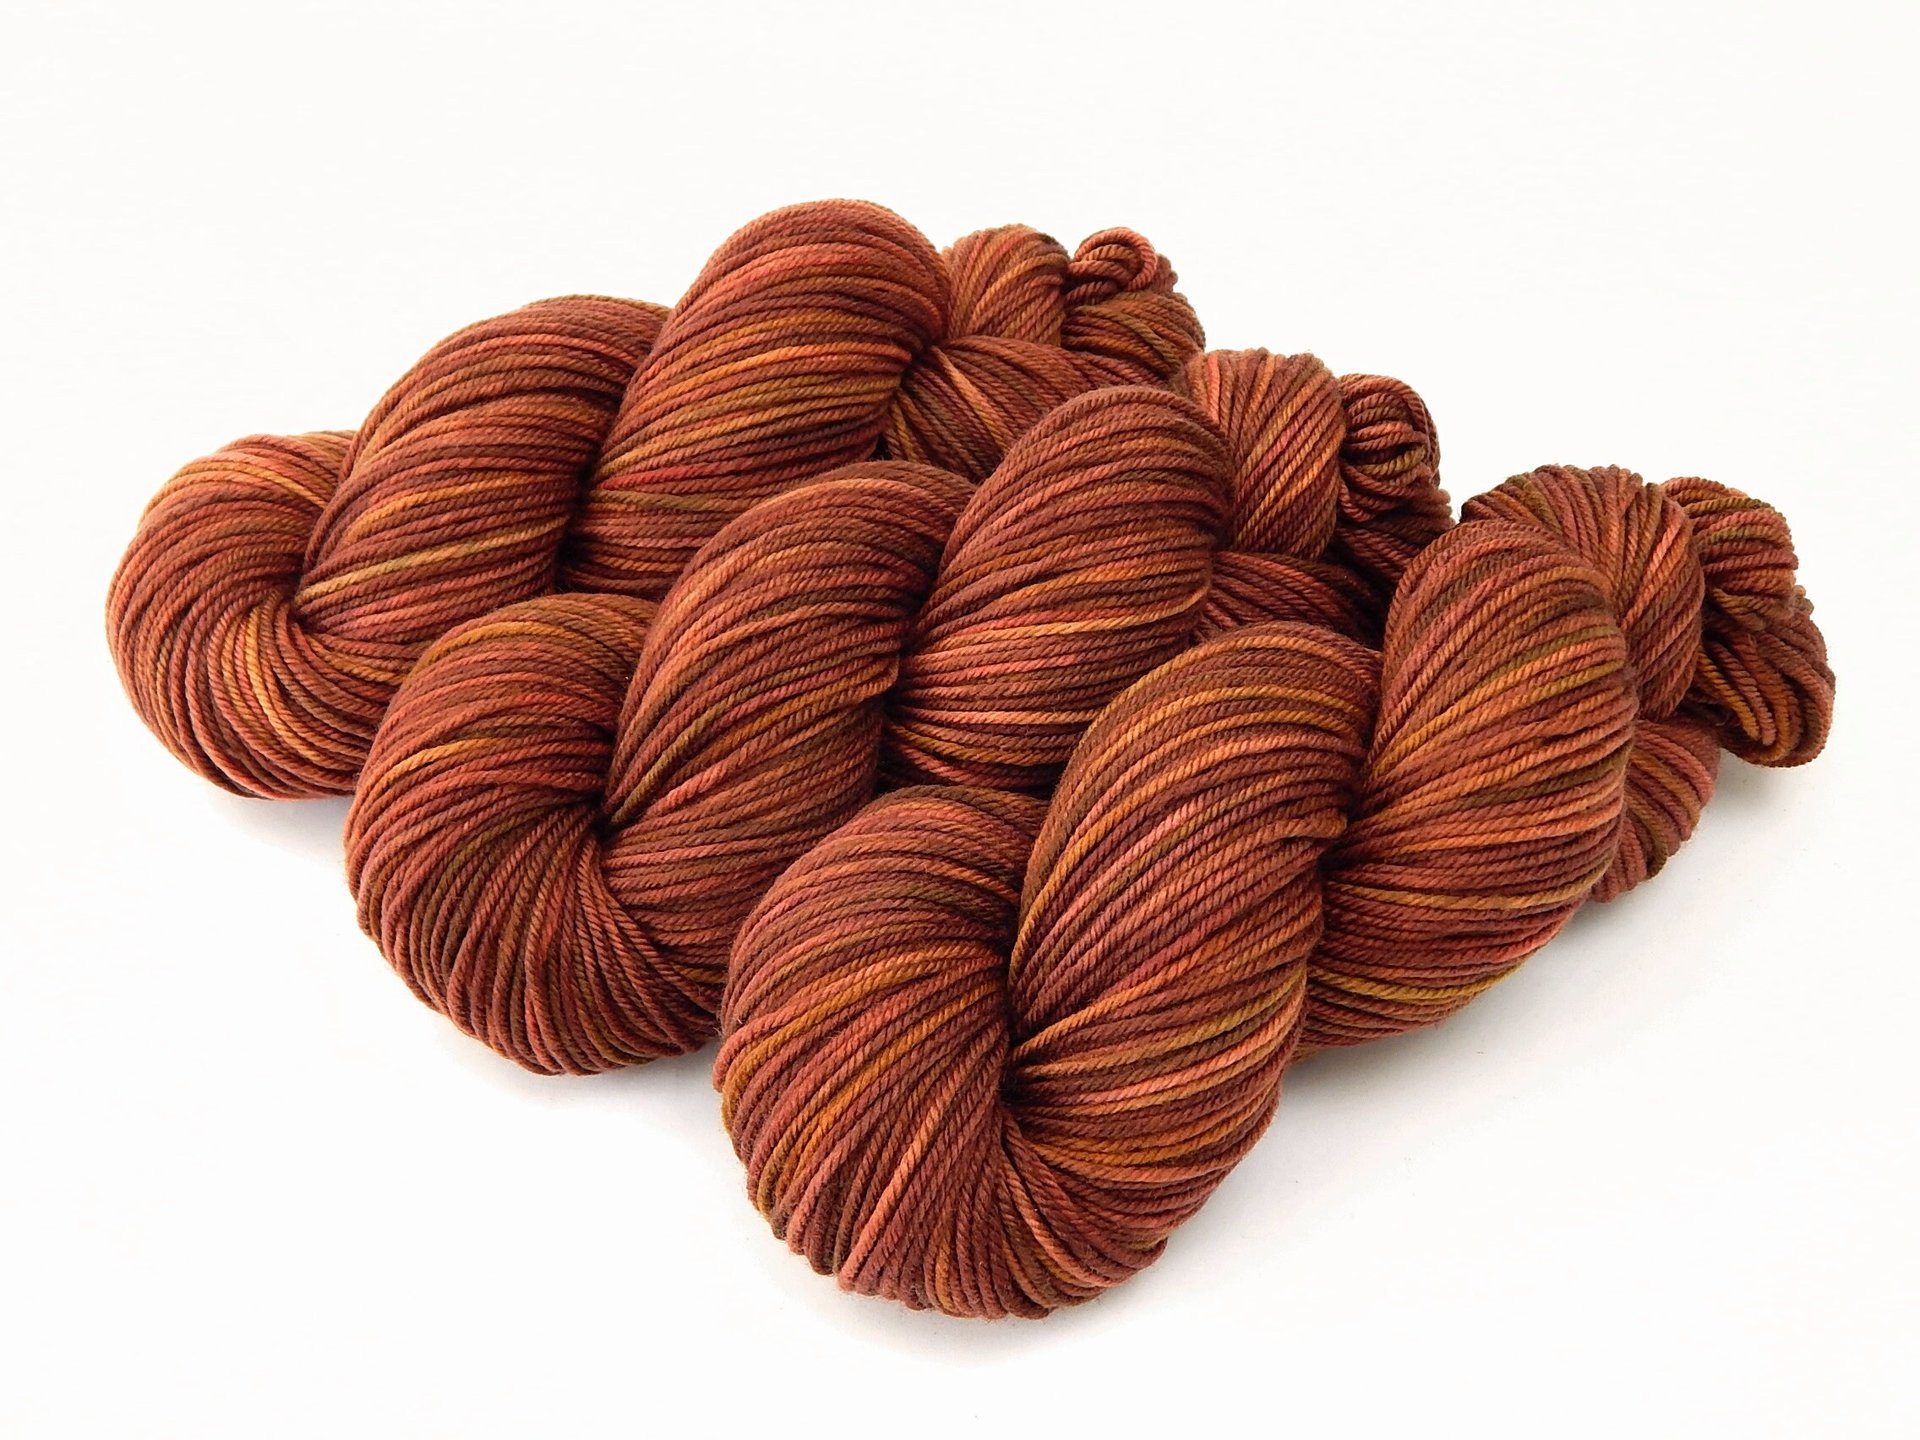 Hand Dyed Yarn, DK Weight Superwash Merino Wool - Spice - Indie Dyed Yarn, Soft Burnt Orange Wool Yarn, Rust Knitting Yarn, Autumn Colors